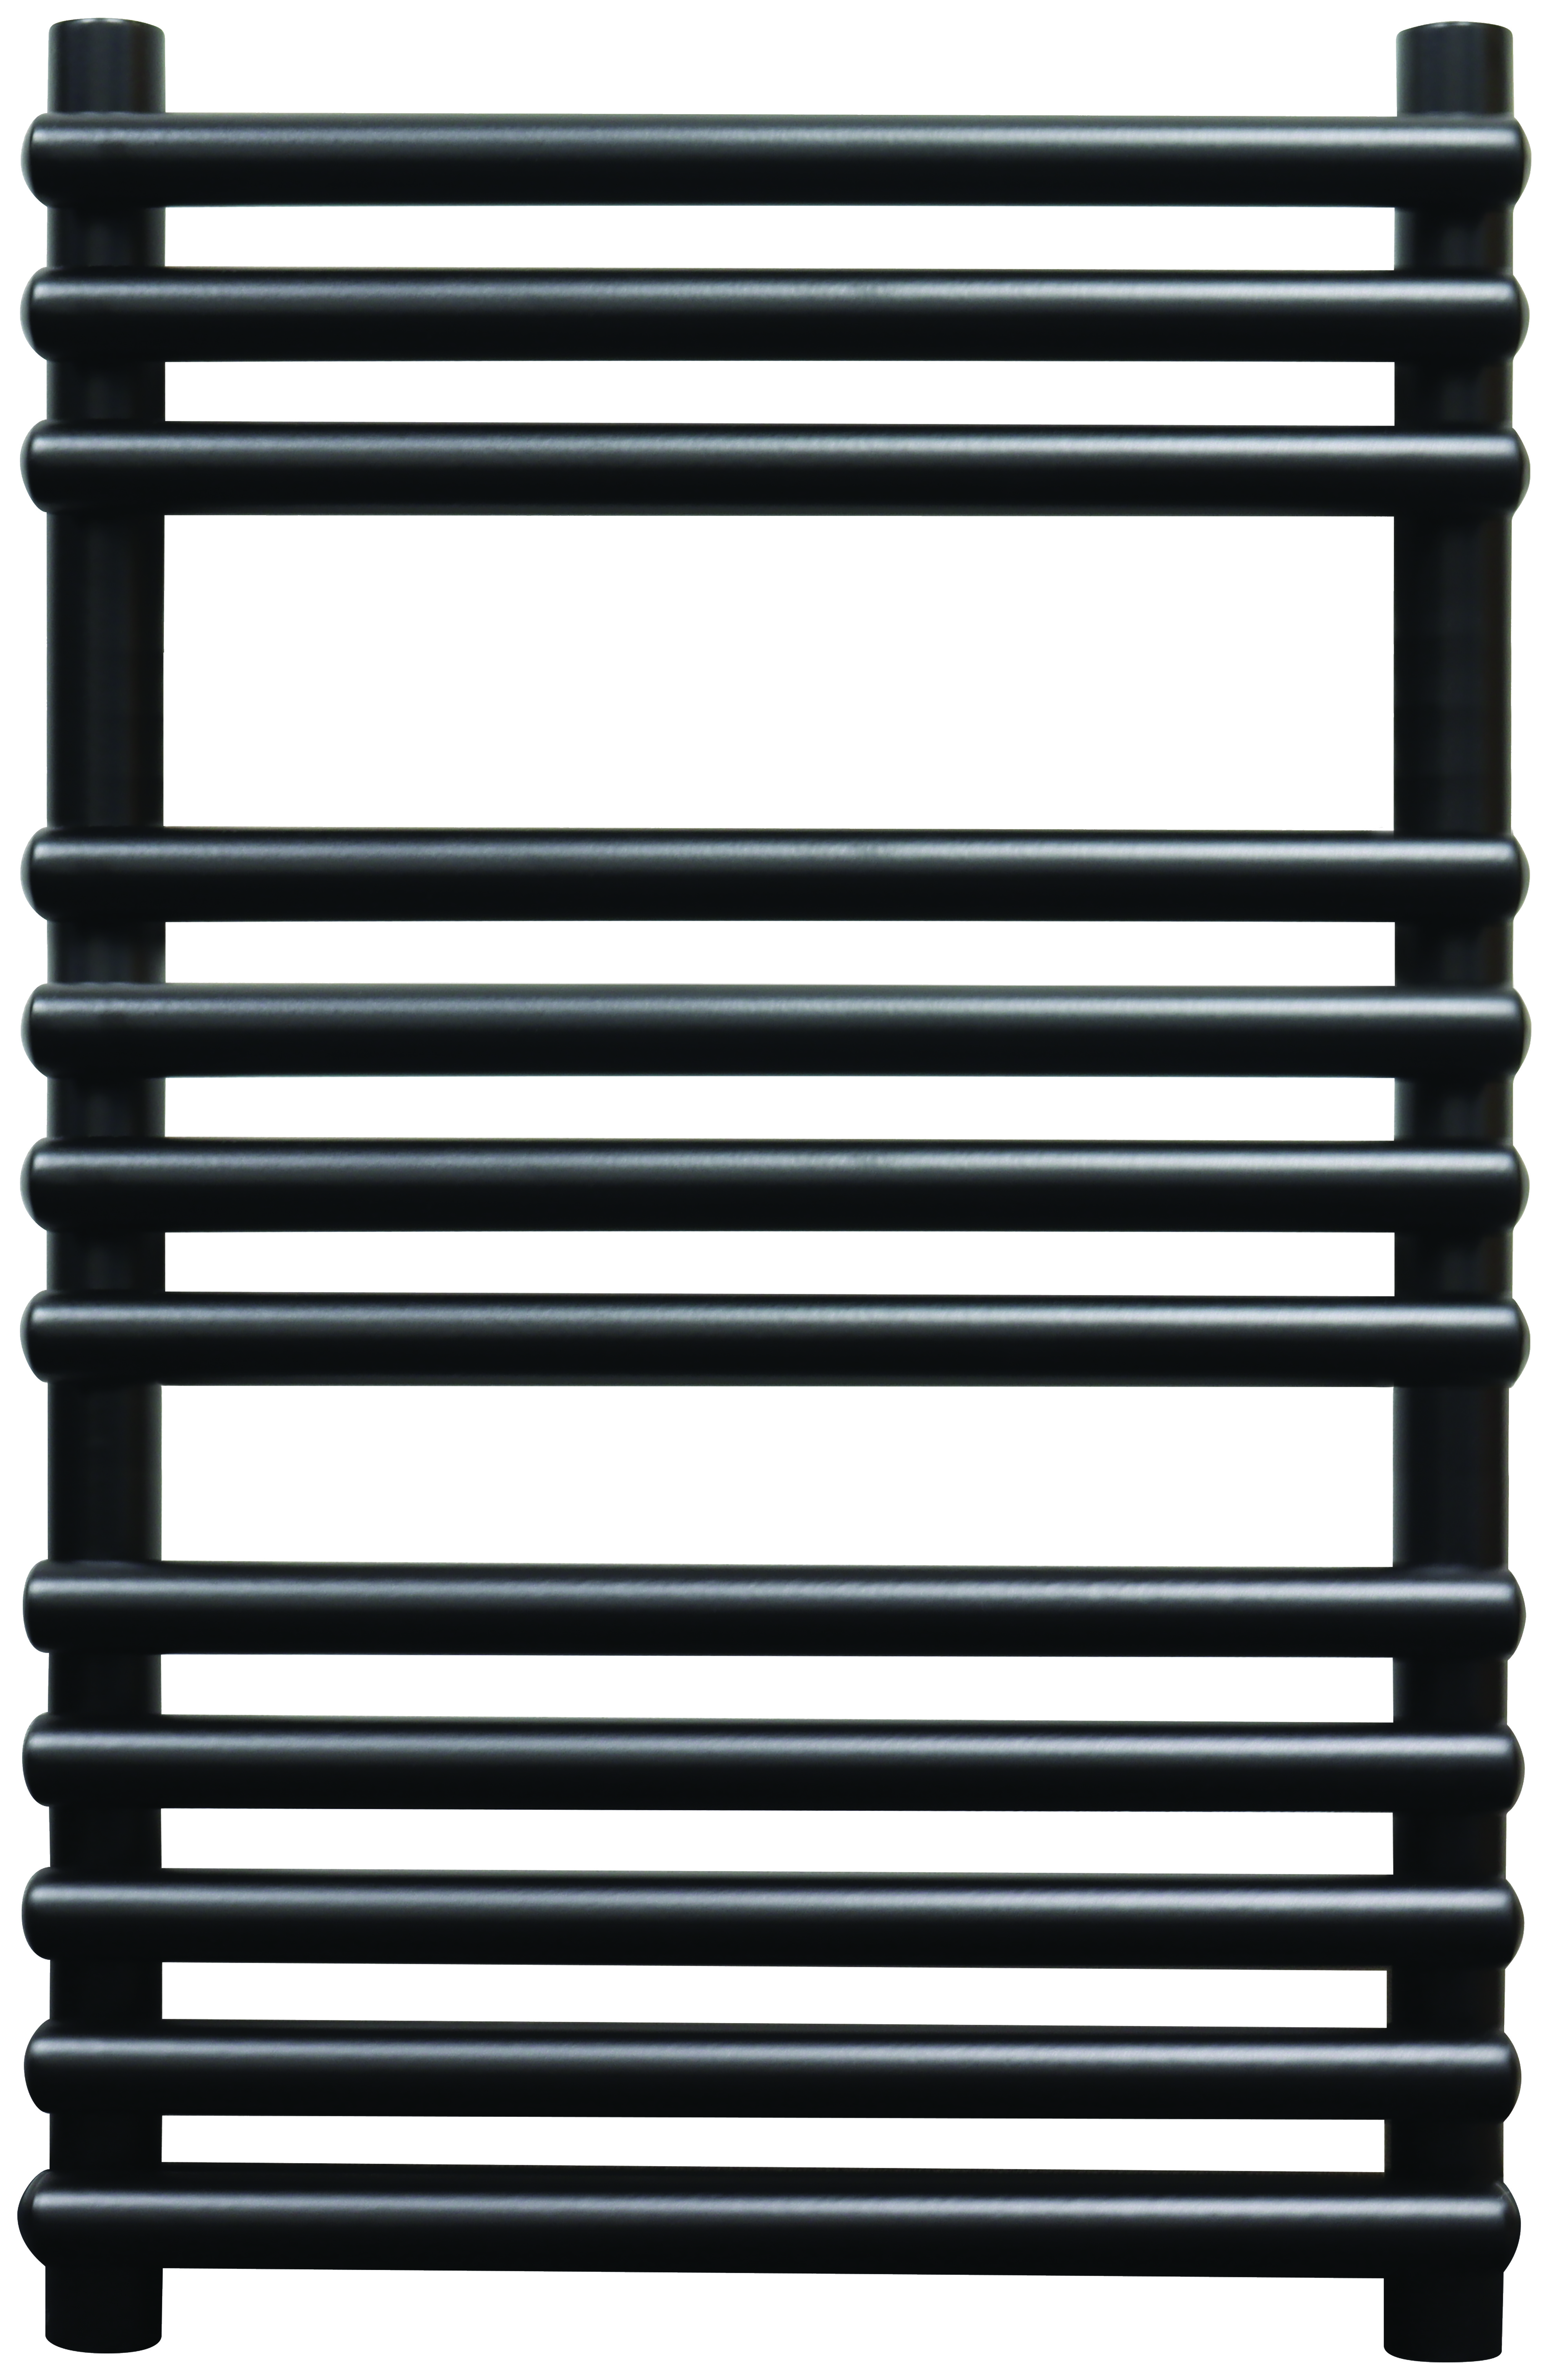 Image of Towelrads Double Iridio Matt Black Towel Radiator - 800 x 500mm